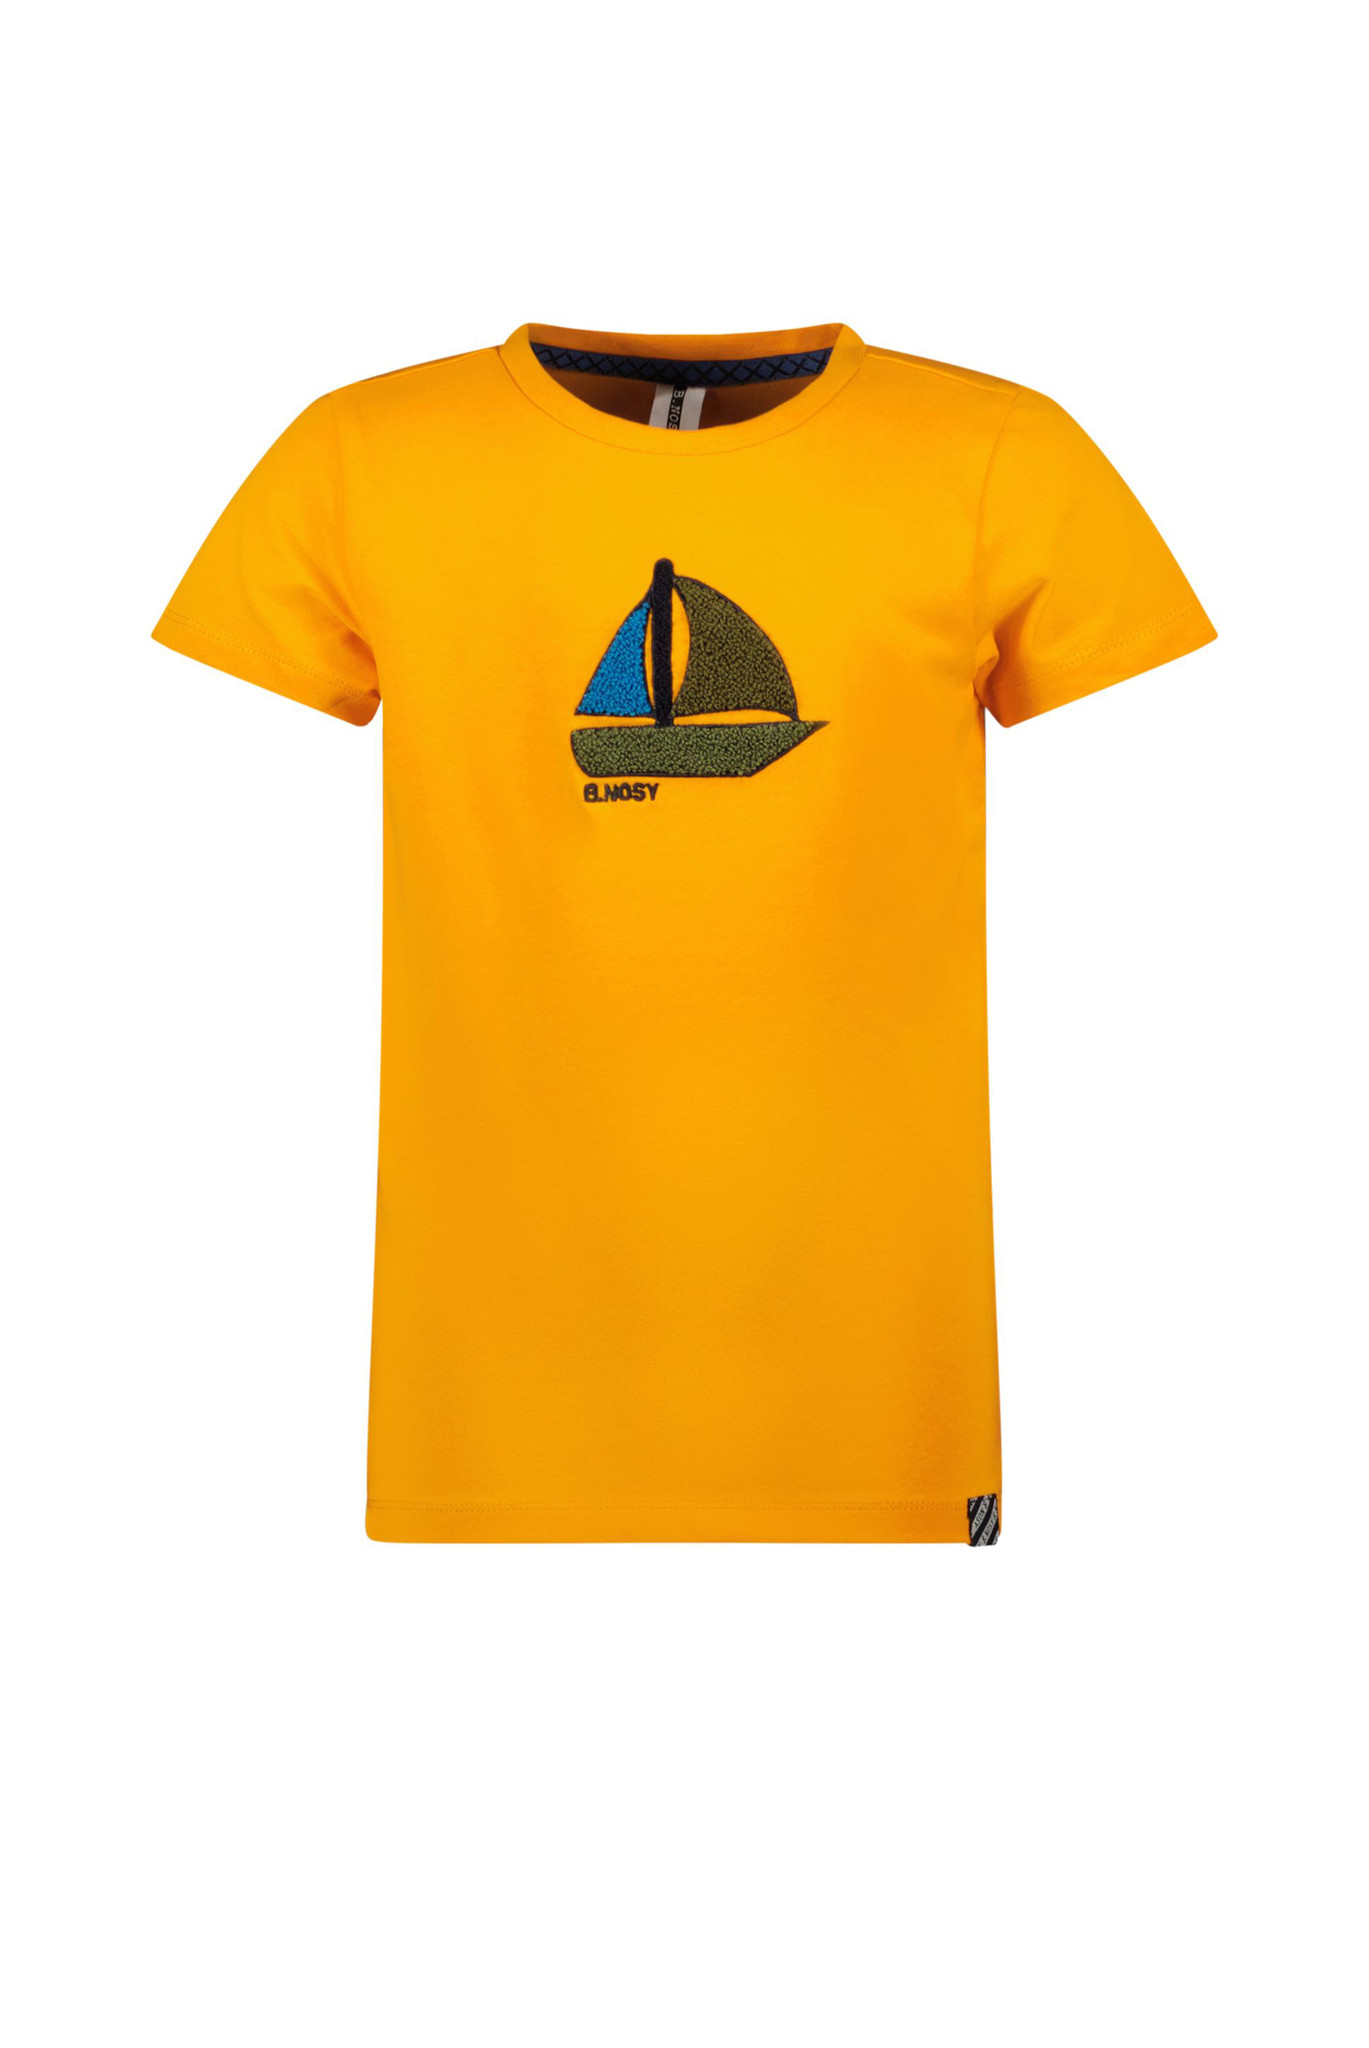 B.Nosy Jongens t-shirt print - Calm oranje